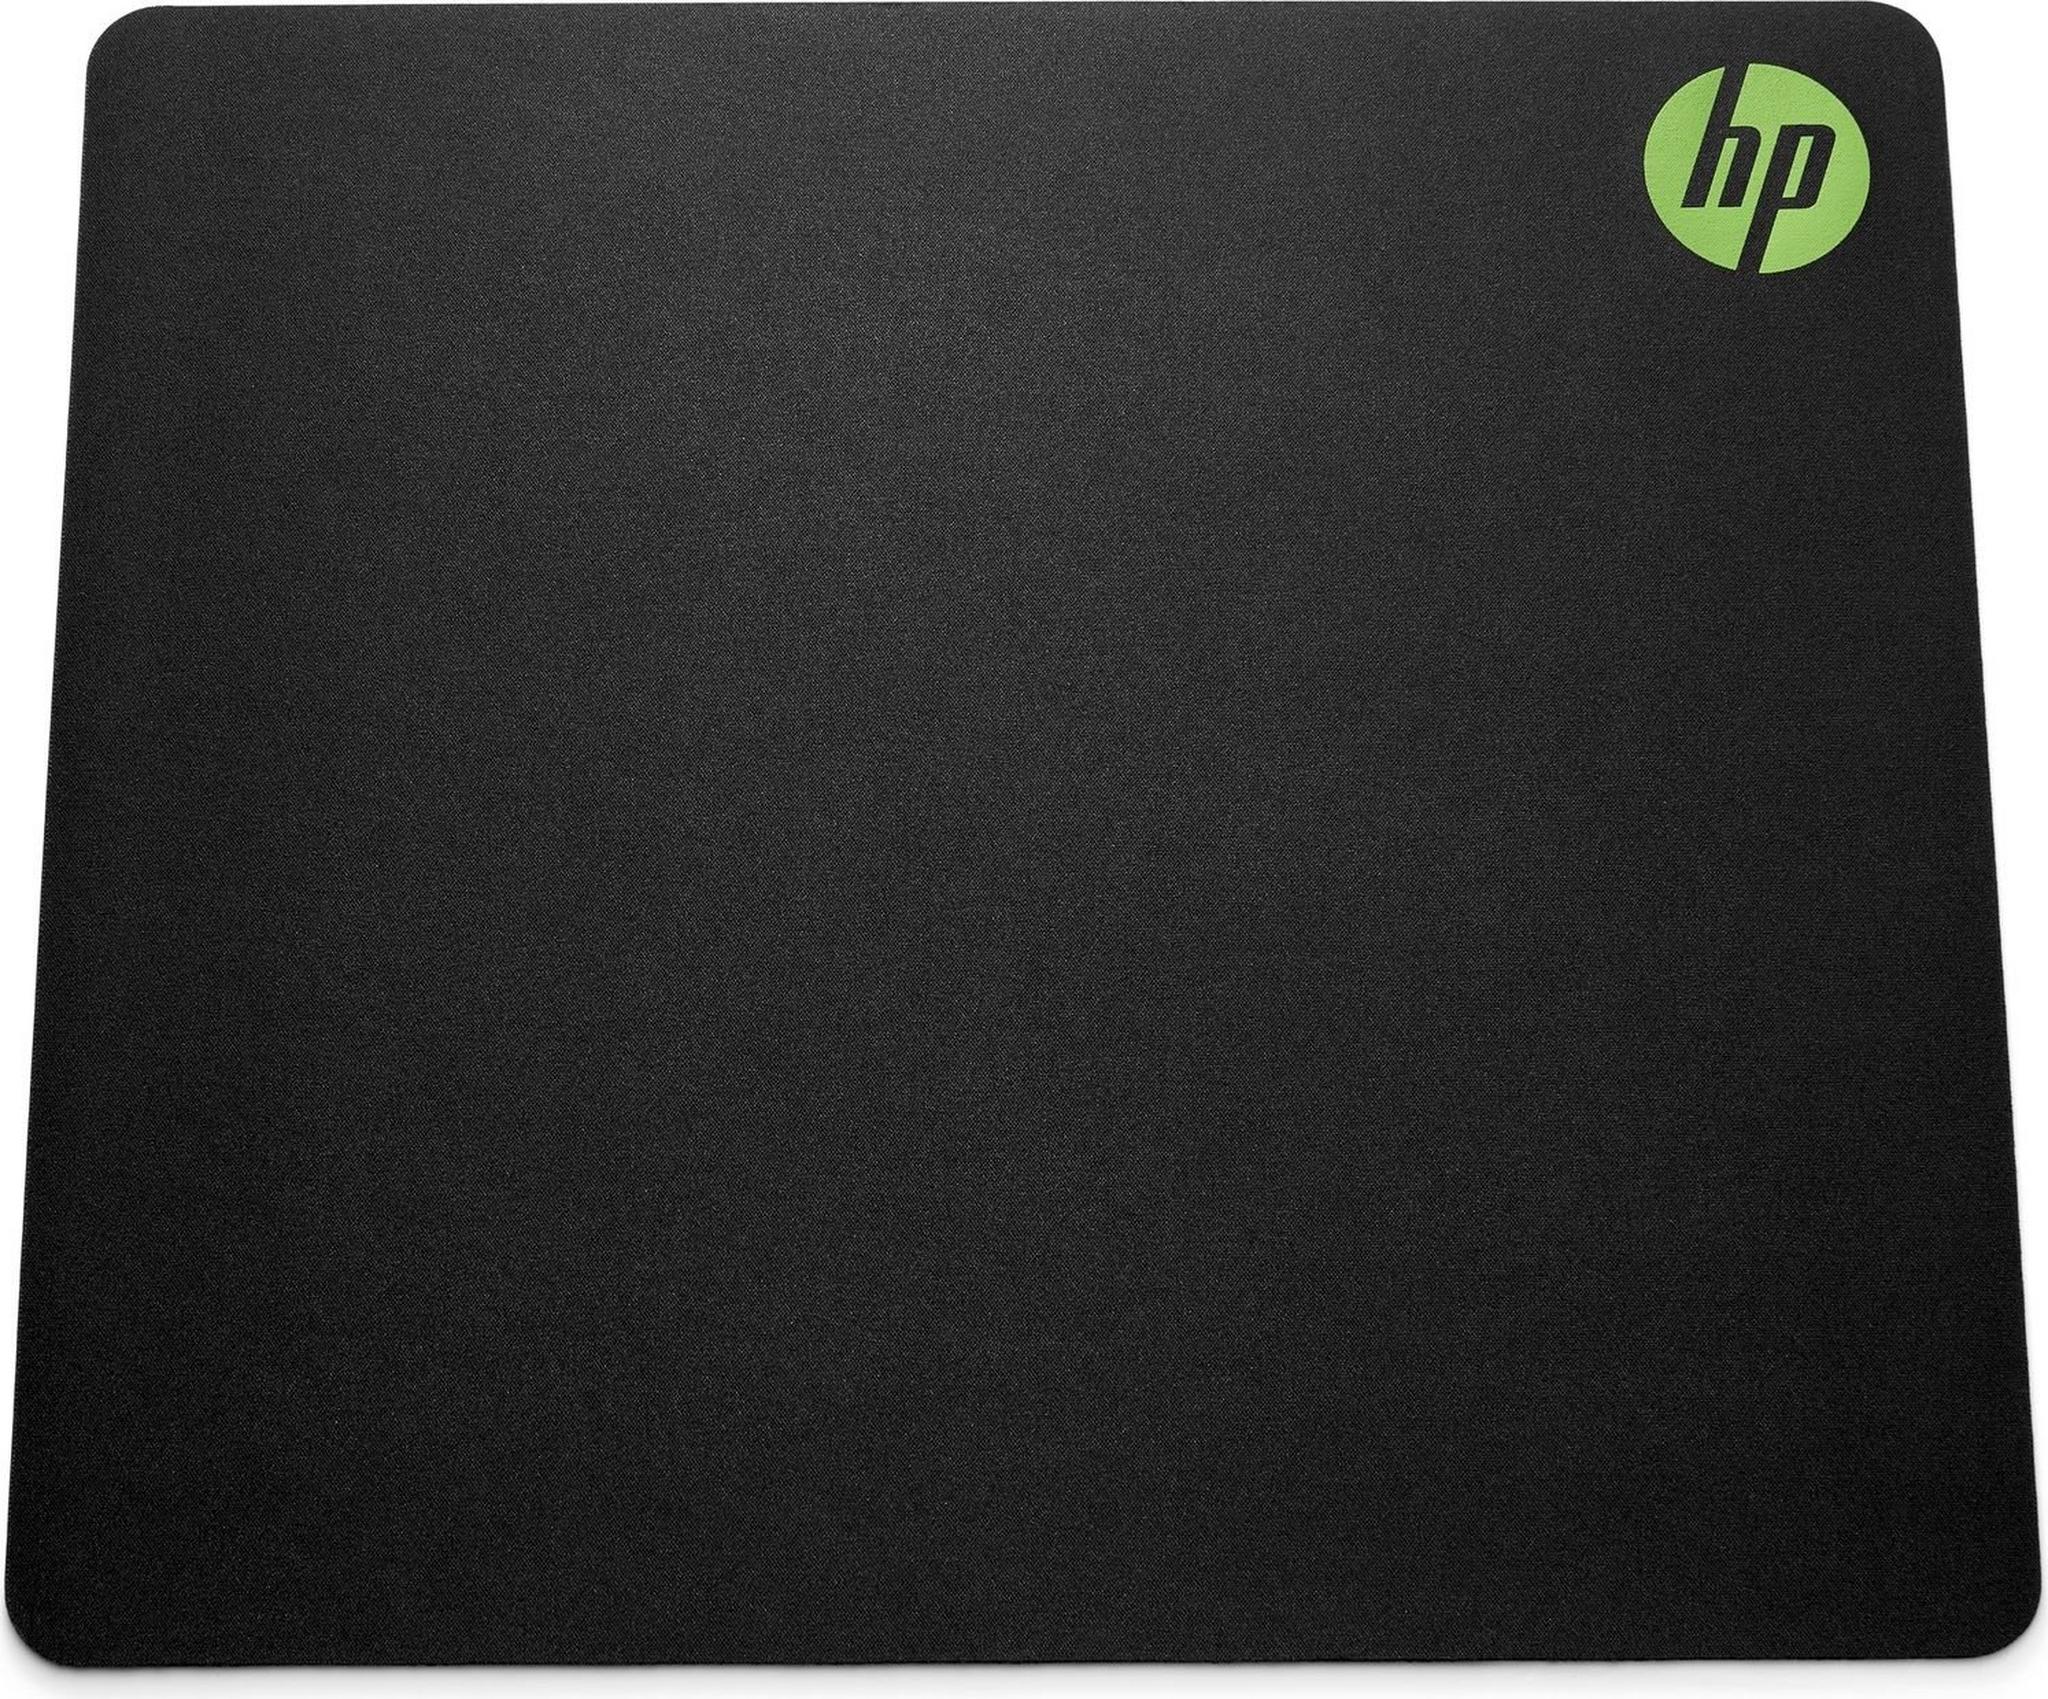 HP Pavilion Gaming Mouse Pad 300 - Black